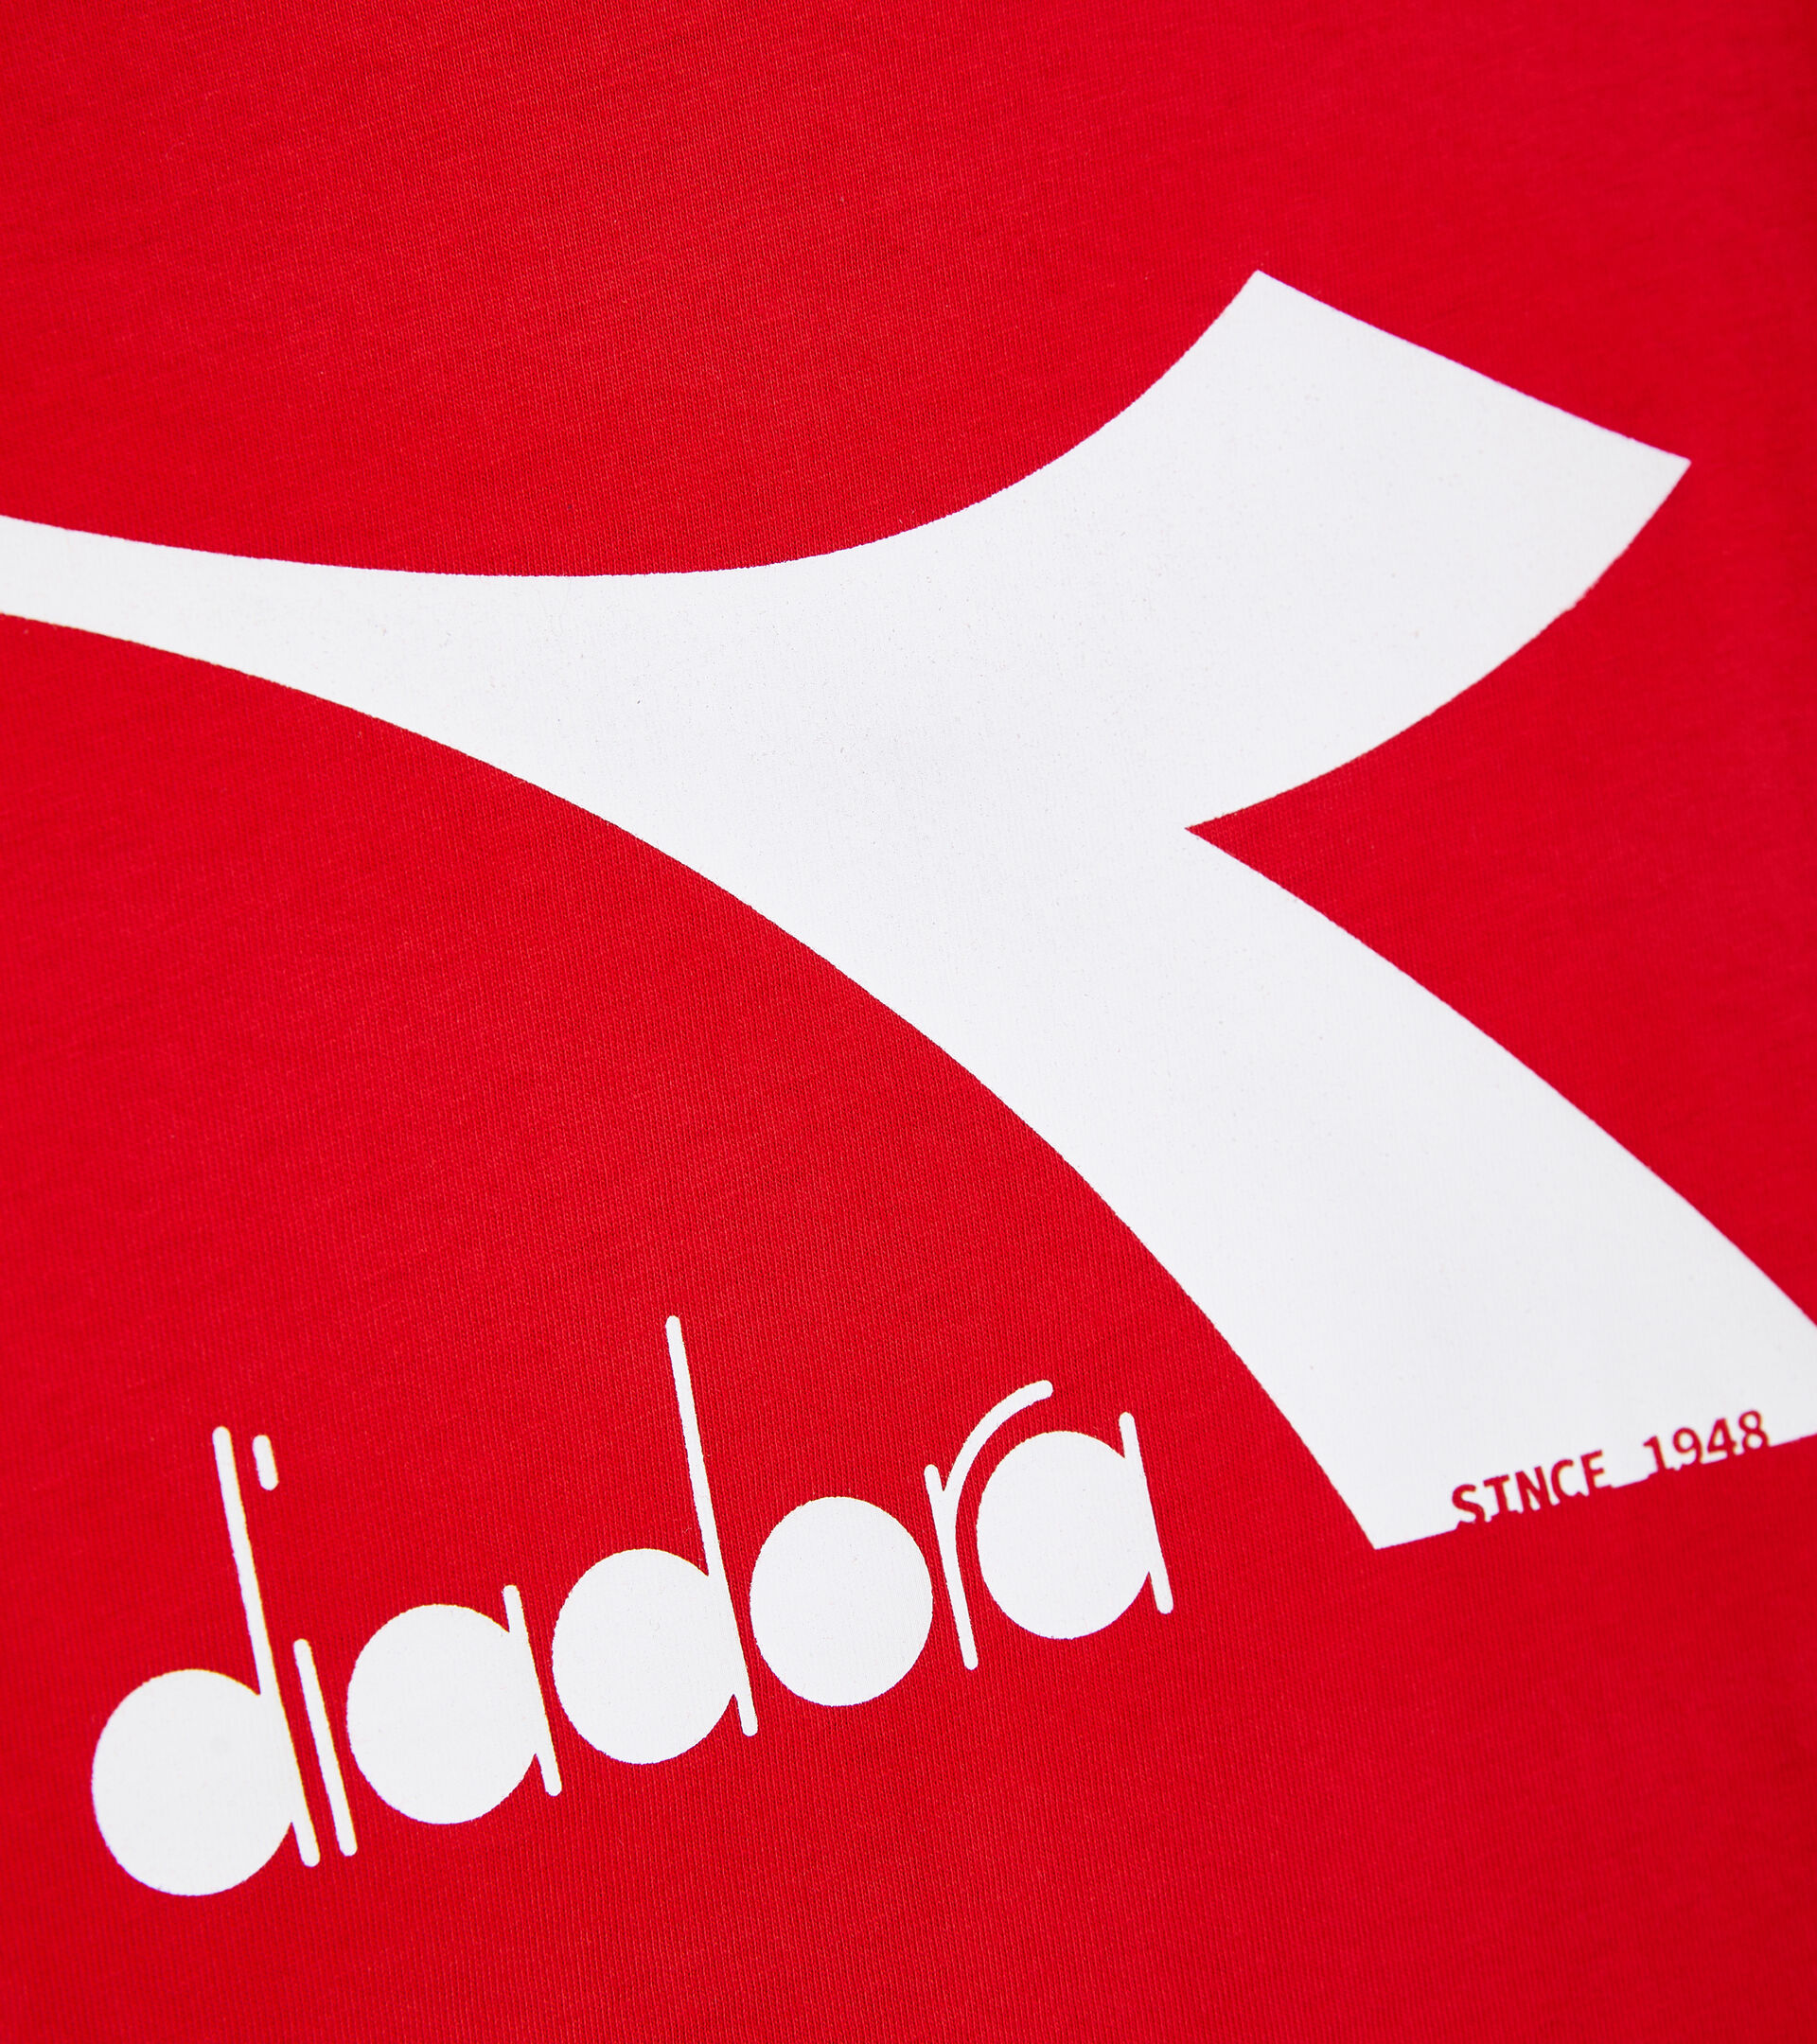 Sports T-shirt - Kids JU.T-SHIRT SS BL CARMINE RED - Diadora